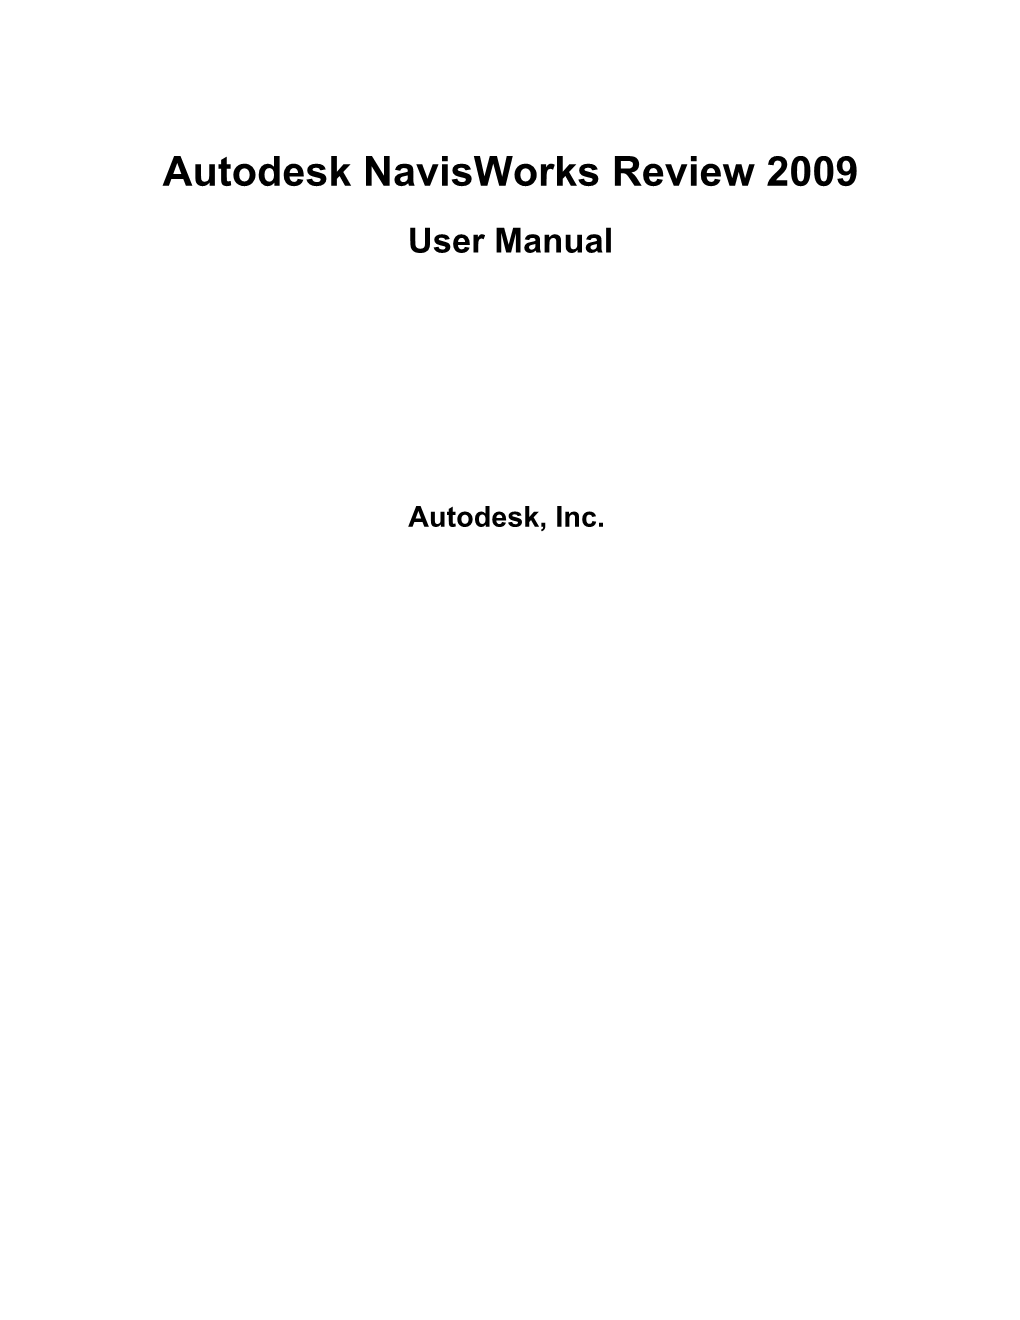 Autodesk Navisworks Review 2009 User Manual